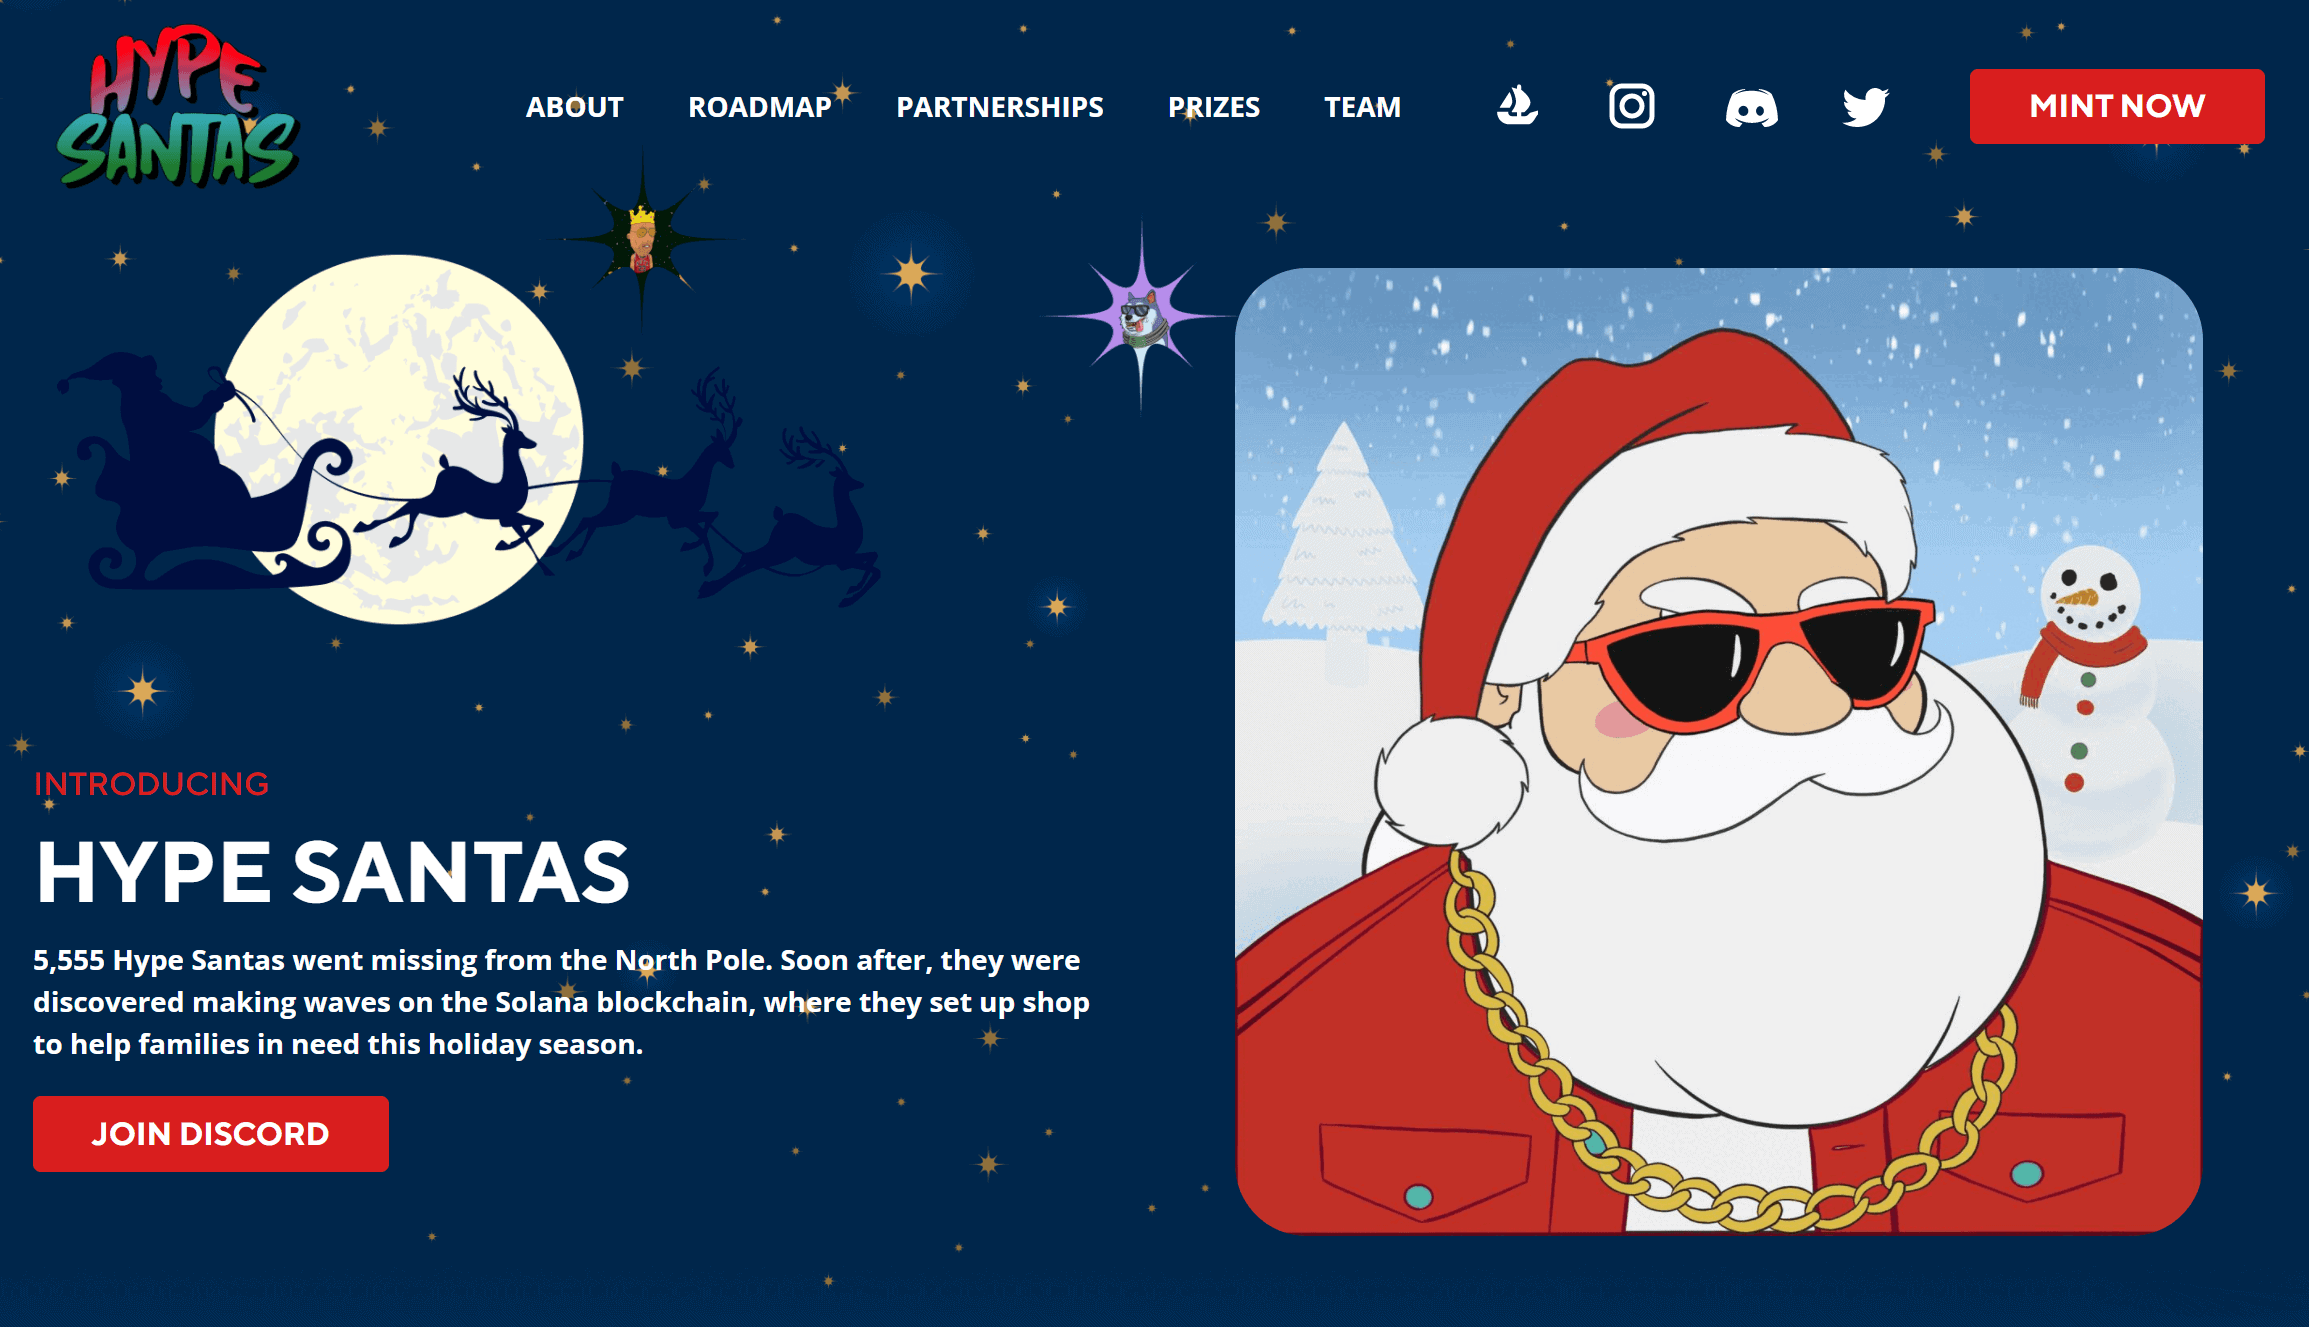 NFT Marketing Hype Santas